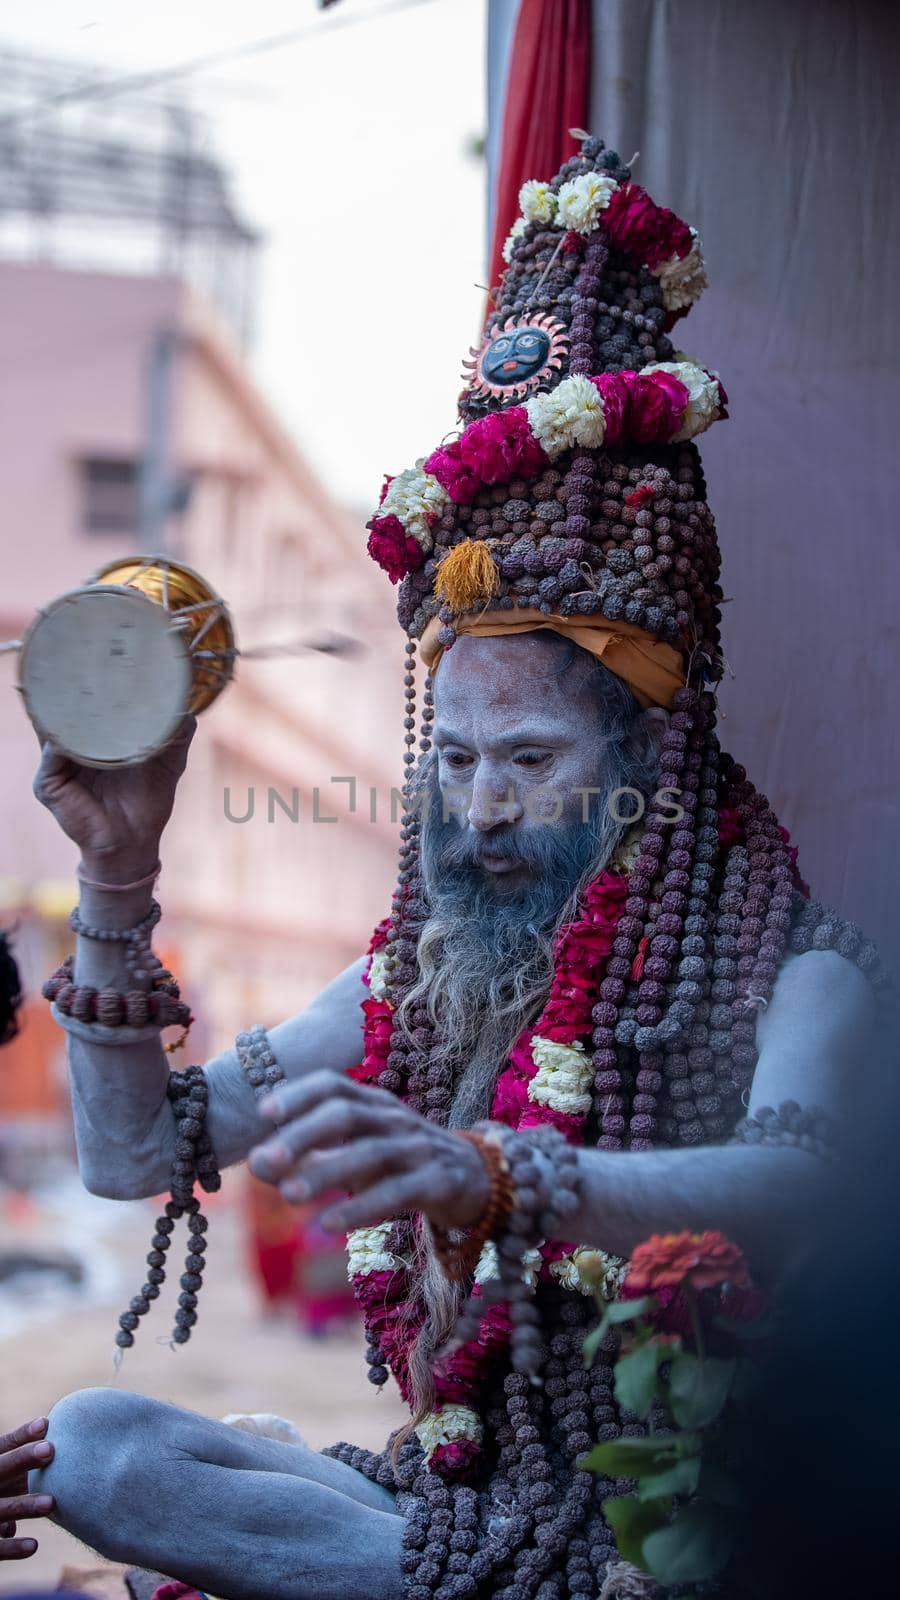 Haridwar, Uttarakhand, India April 12, 2021. Indian Saints in their traditional way of Yog Mudra, meditating. Sitting in silence as part of the initiation of new sadhus during Kumbha Mela. The Naga Sadhus.